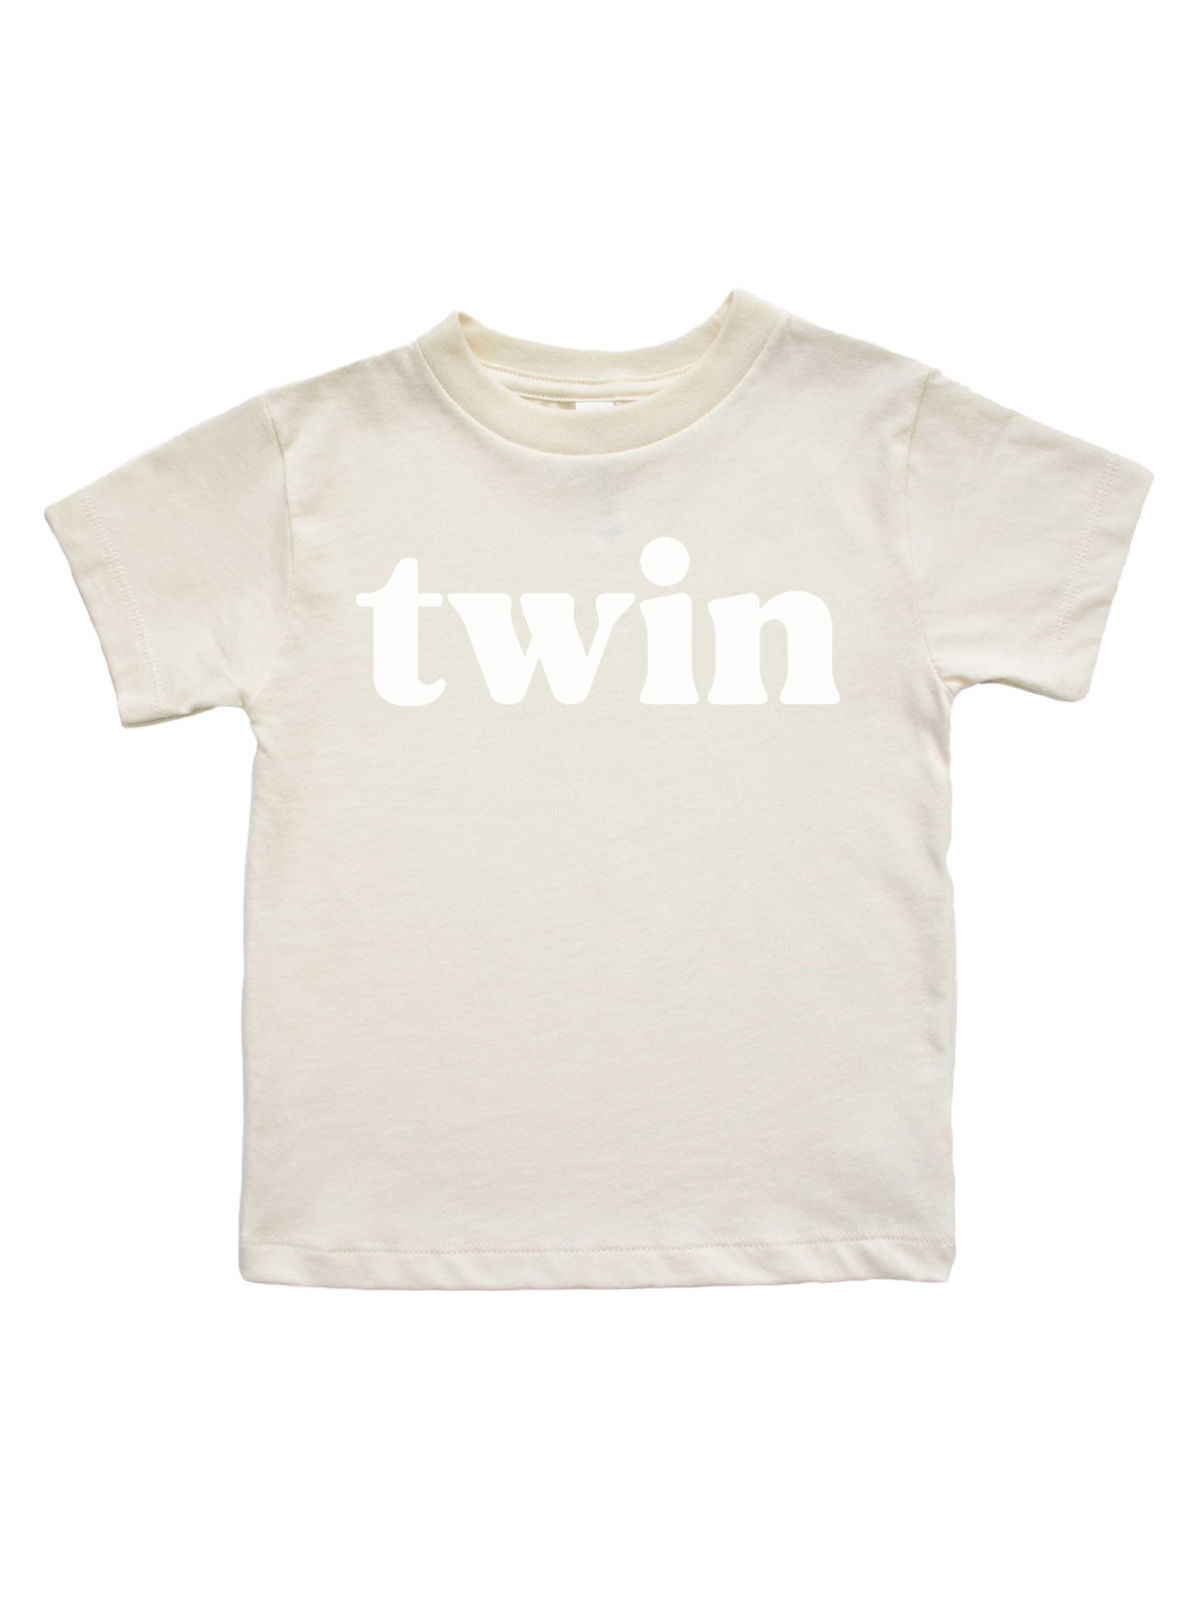 Kids Twin Shirt in Natural